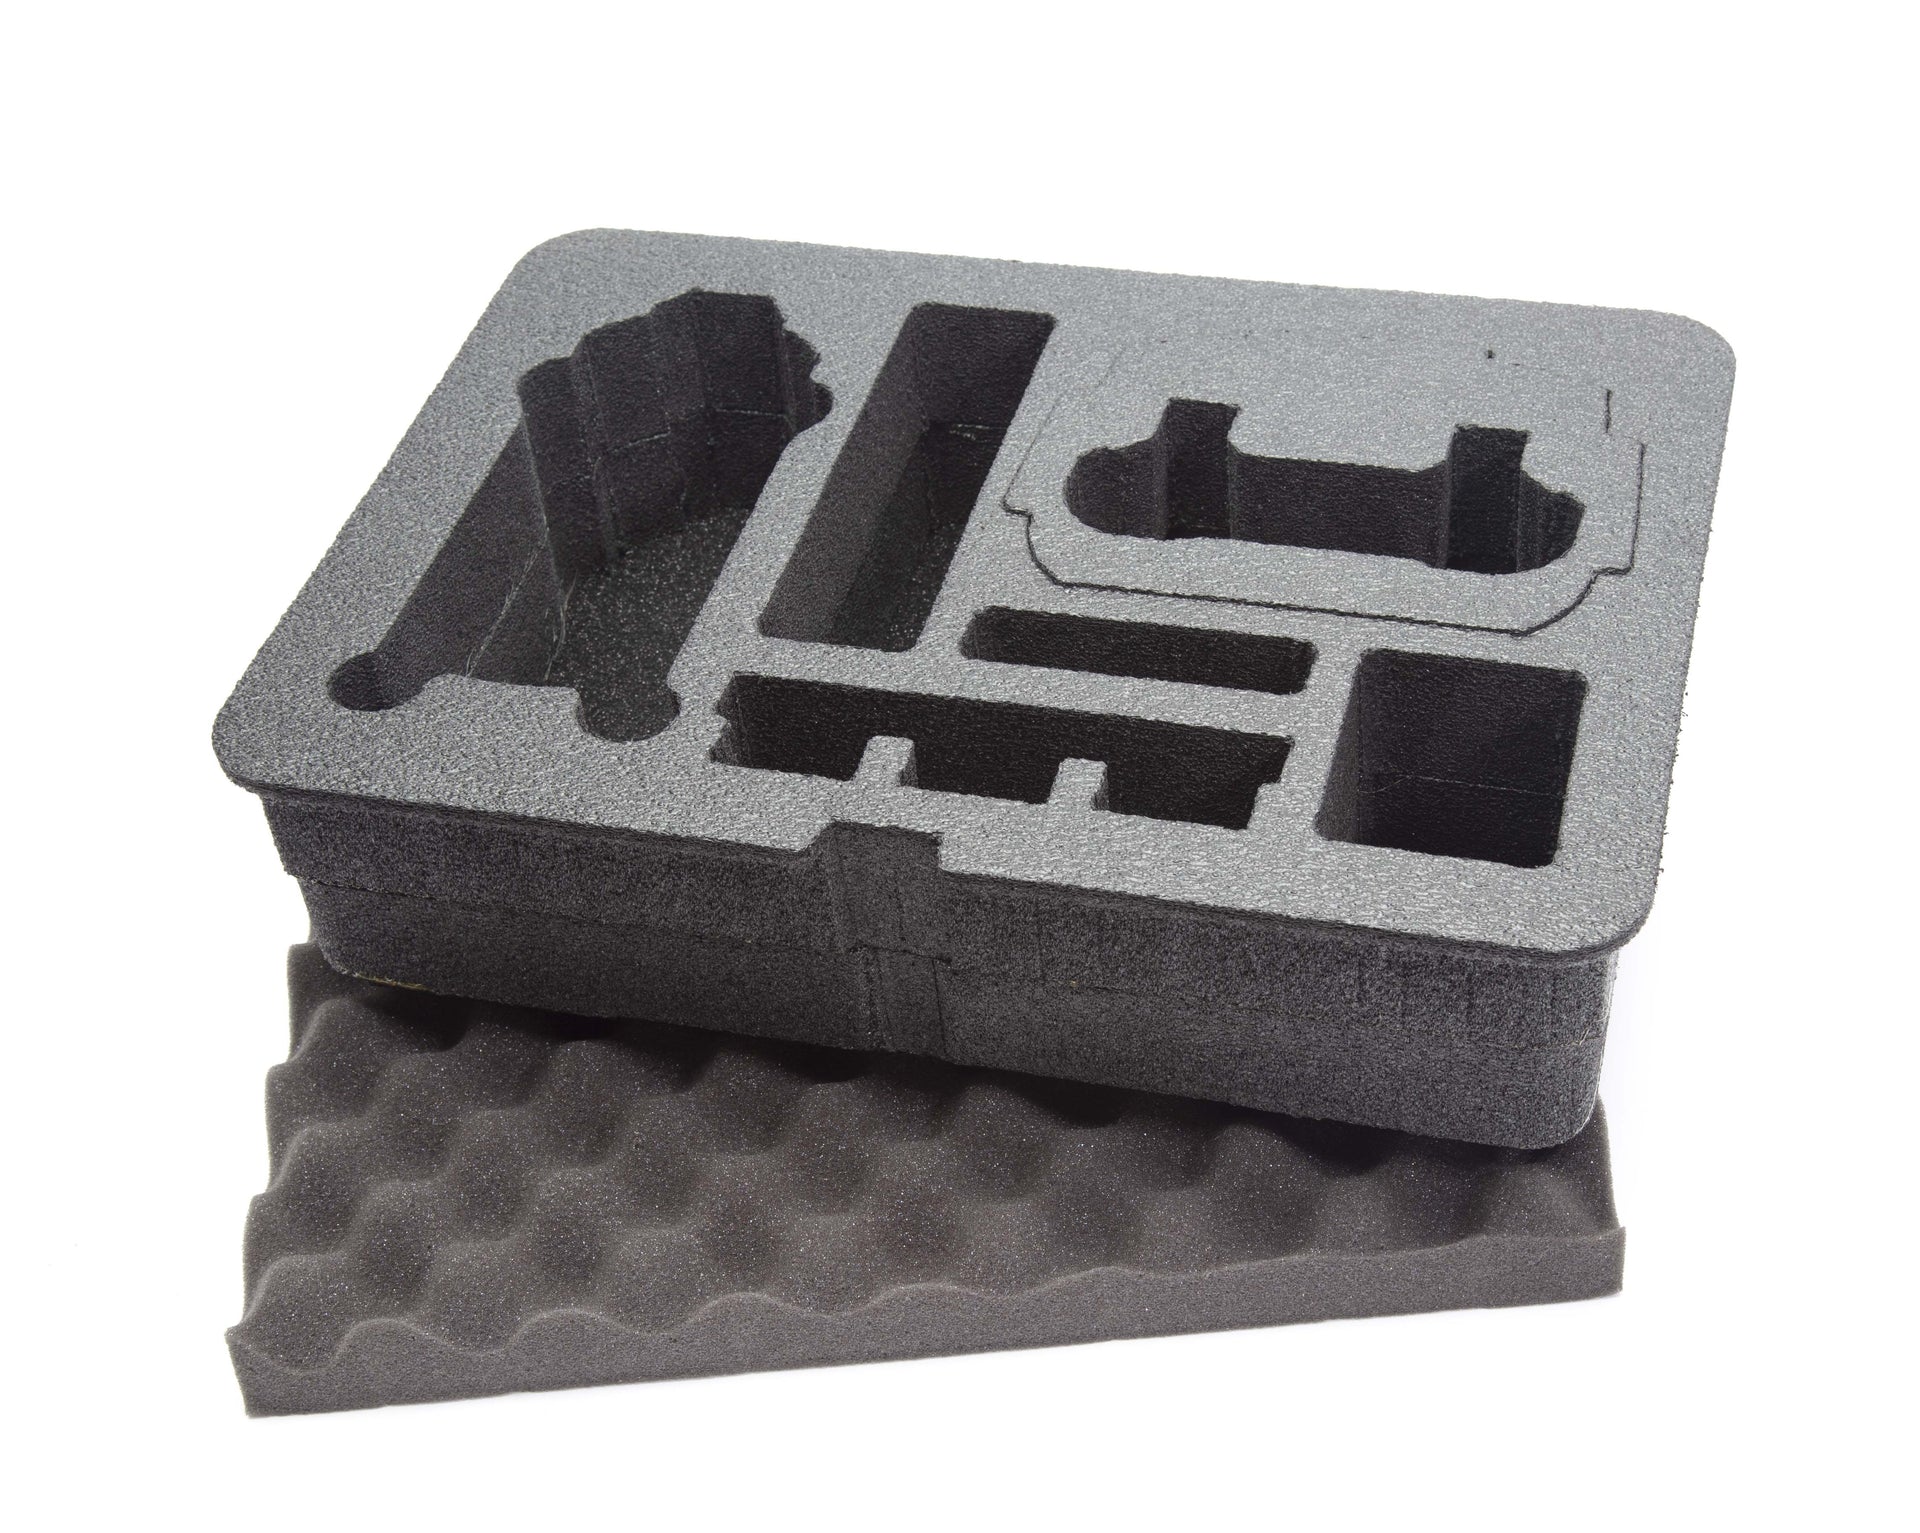 Foam Insert for MM330 Case